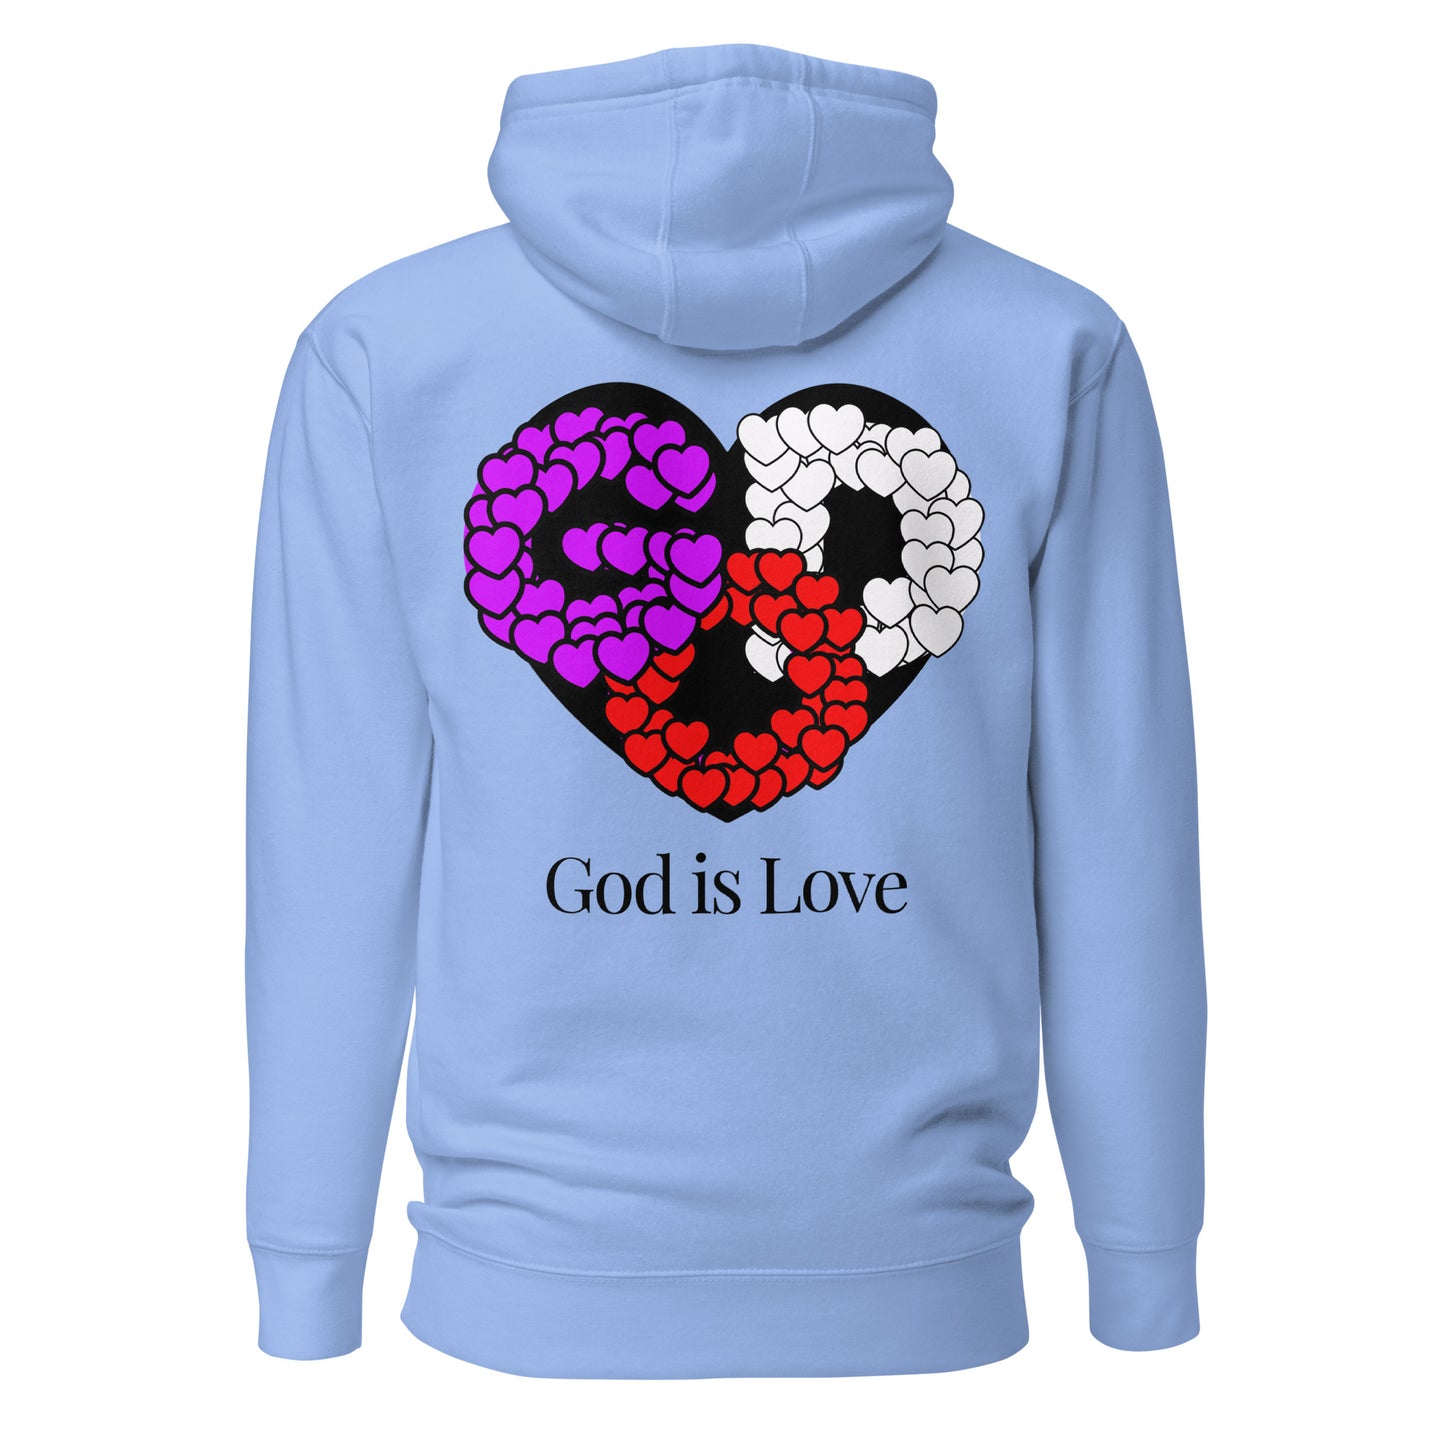 God is Love Women's Hoodie